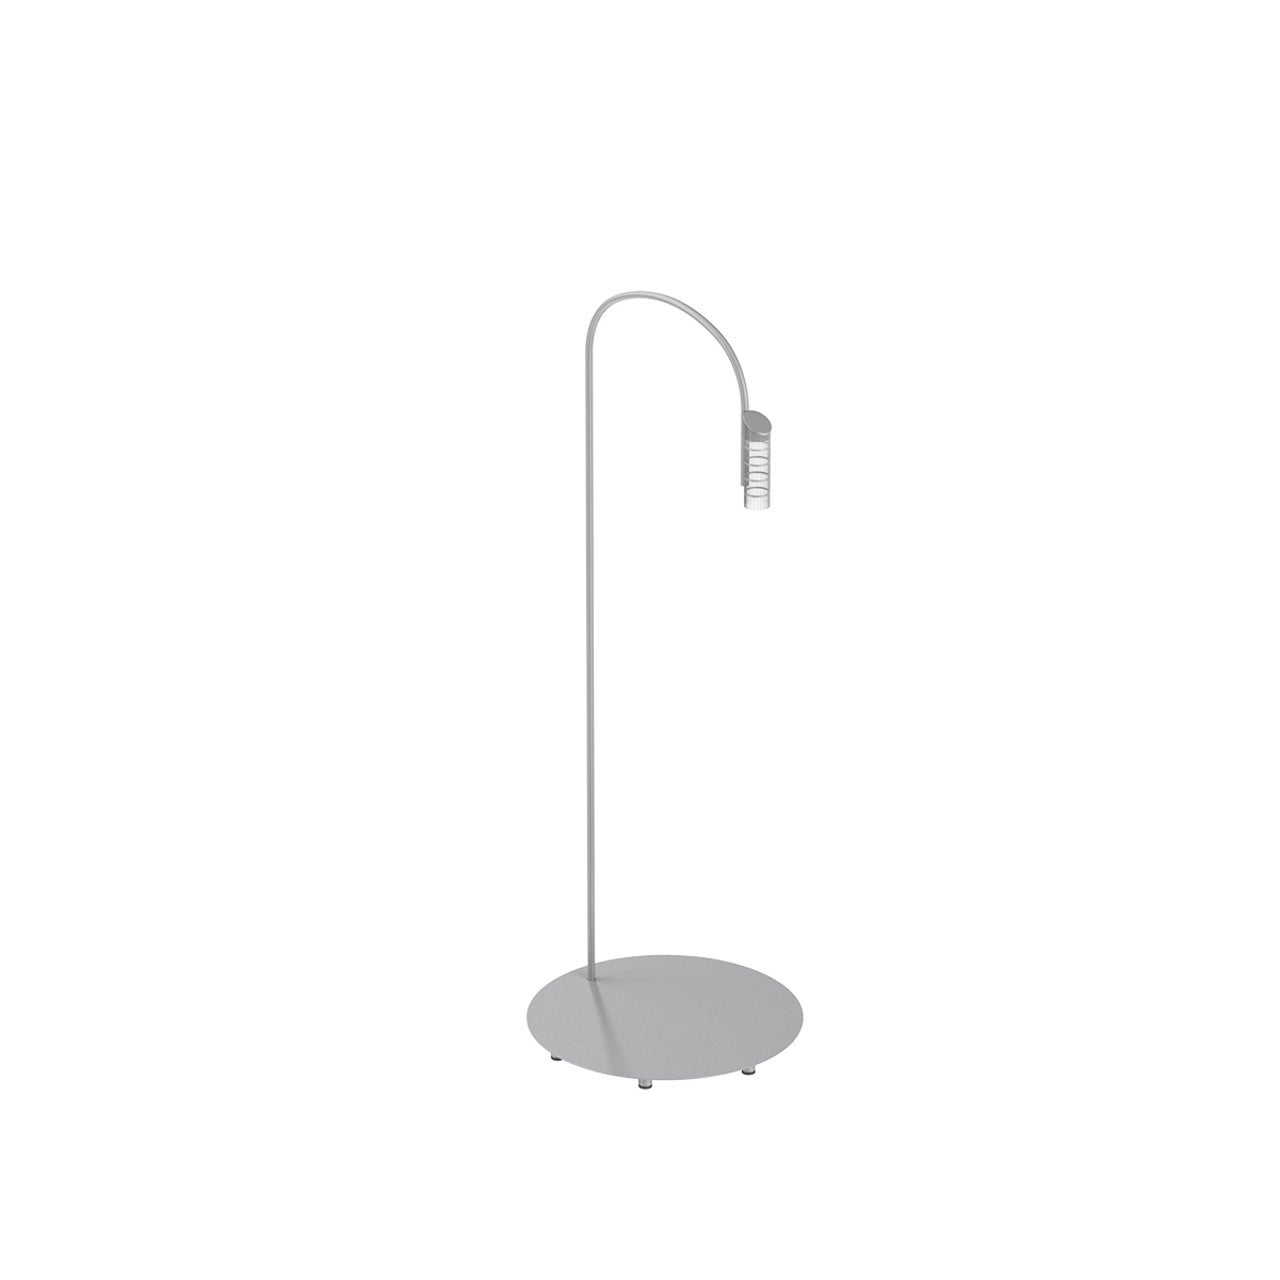 Flos Caule 3000K Model 3 Outdoor Floor Lamp in Grey with Nest Shade For Sale